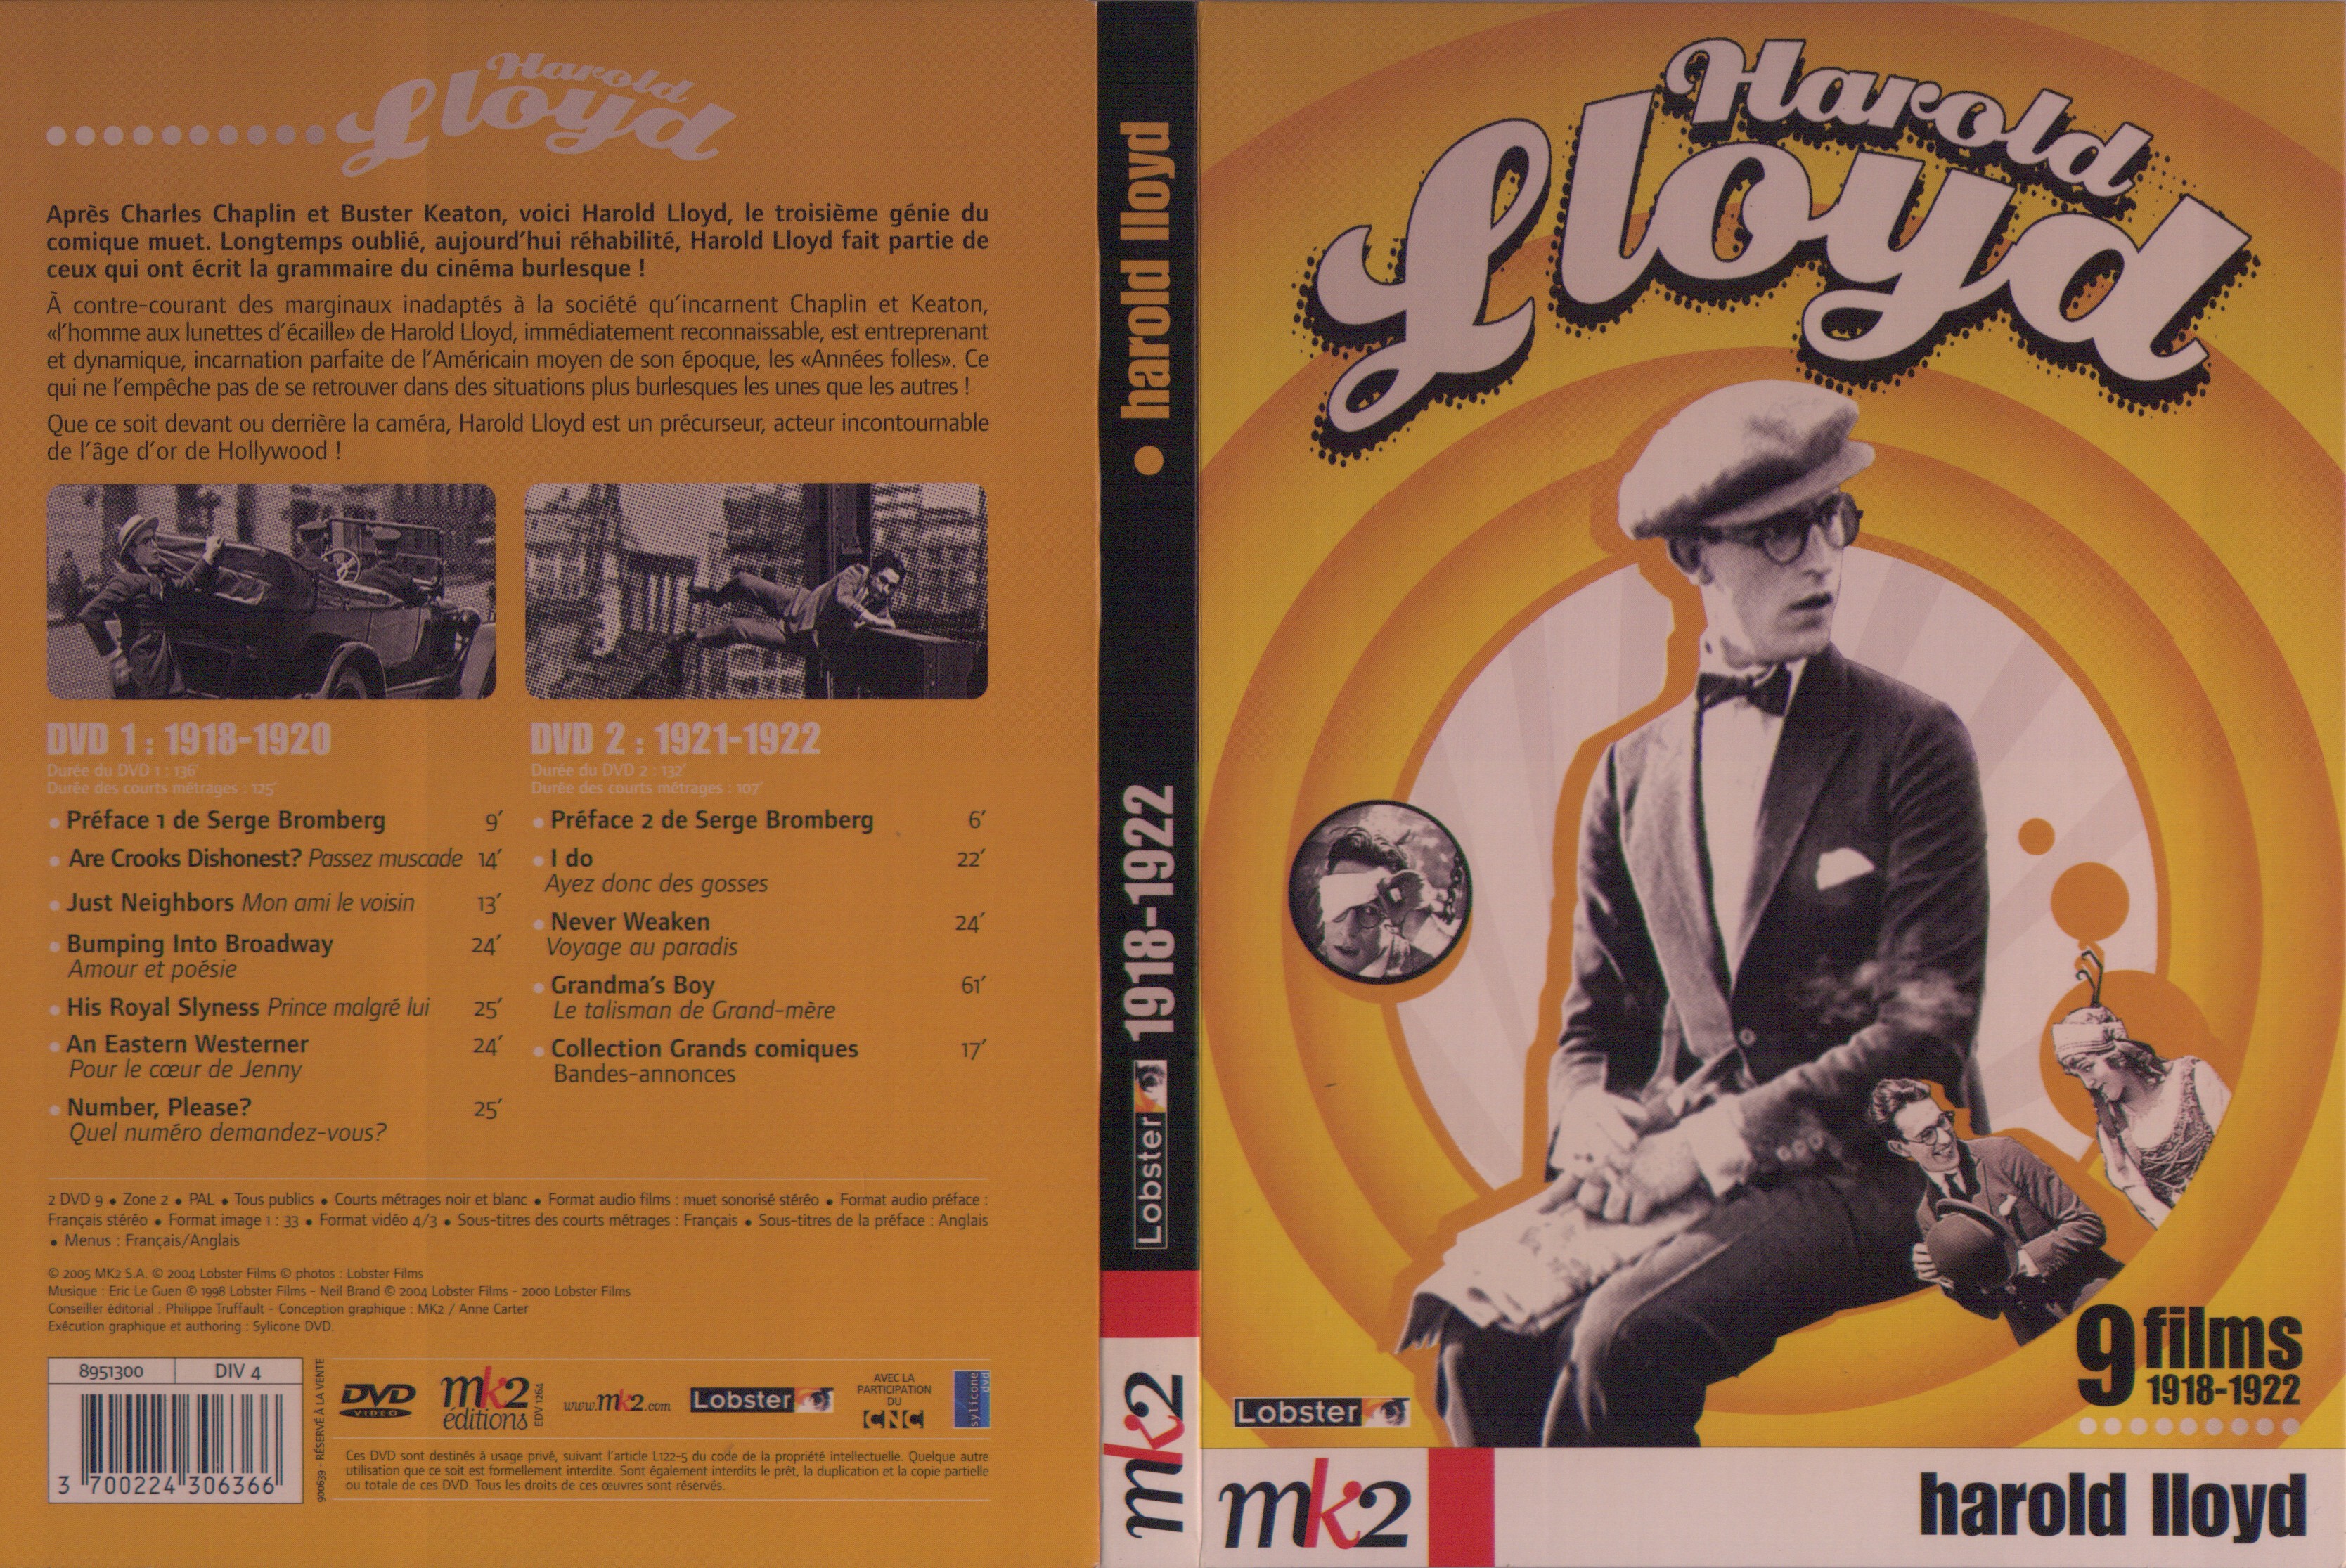 Jaquette DVD Harold Lloyd 9 films